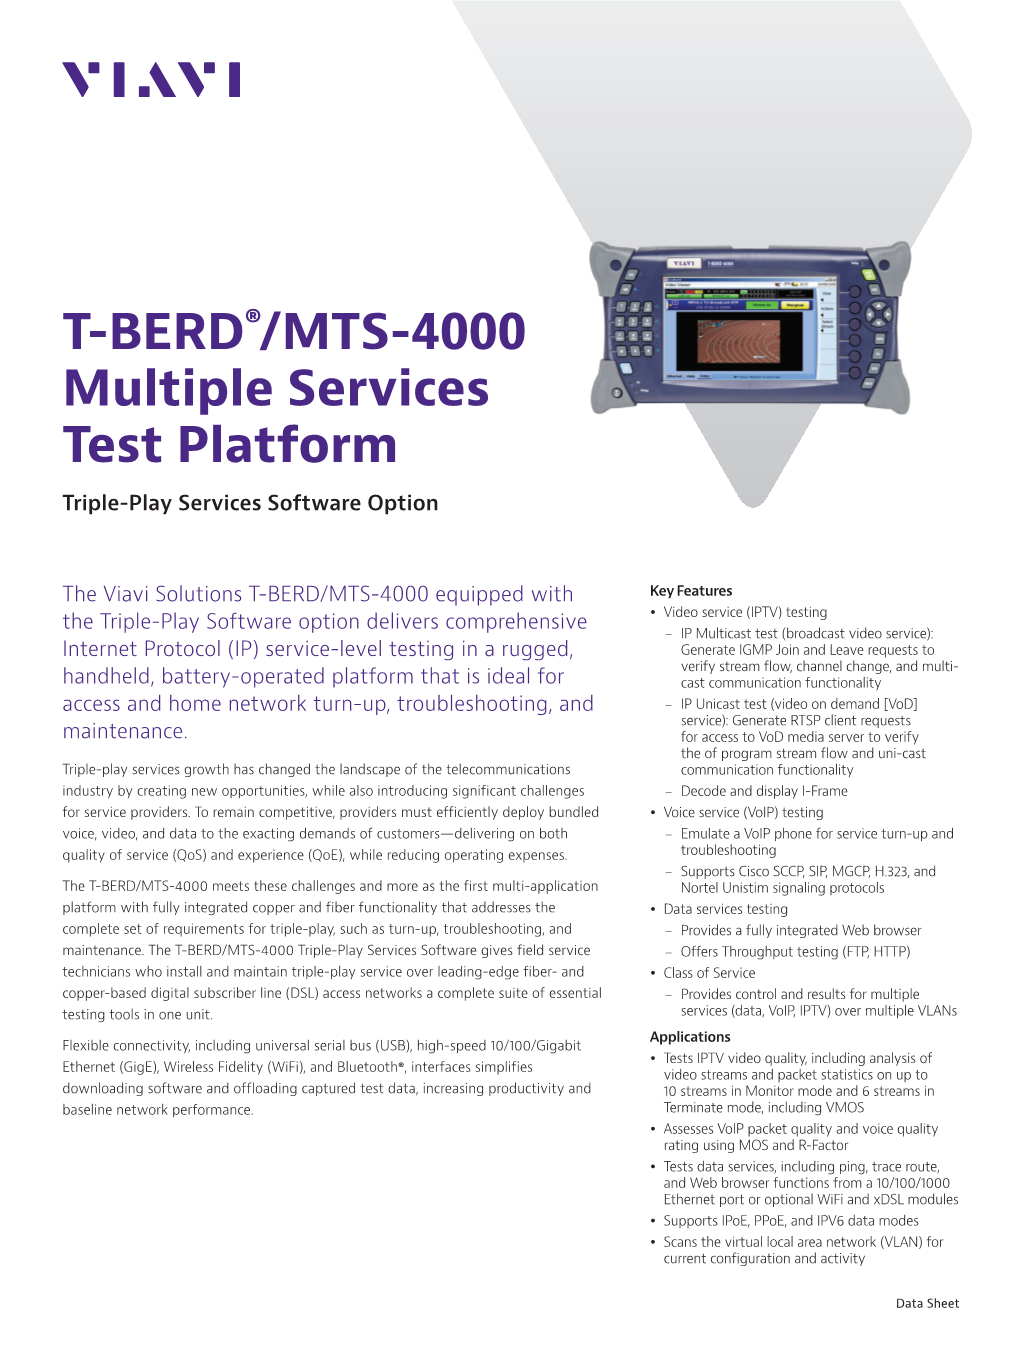 T-BERD/MTS-4000 Multiple Services Test Platform Applications